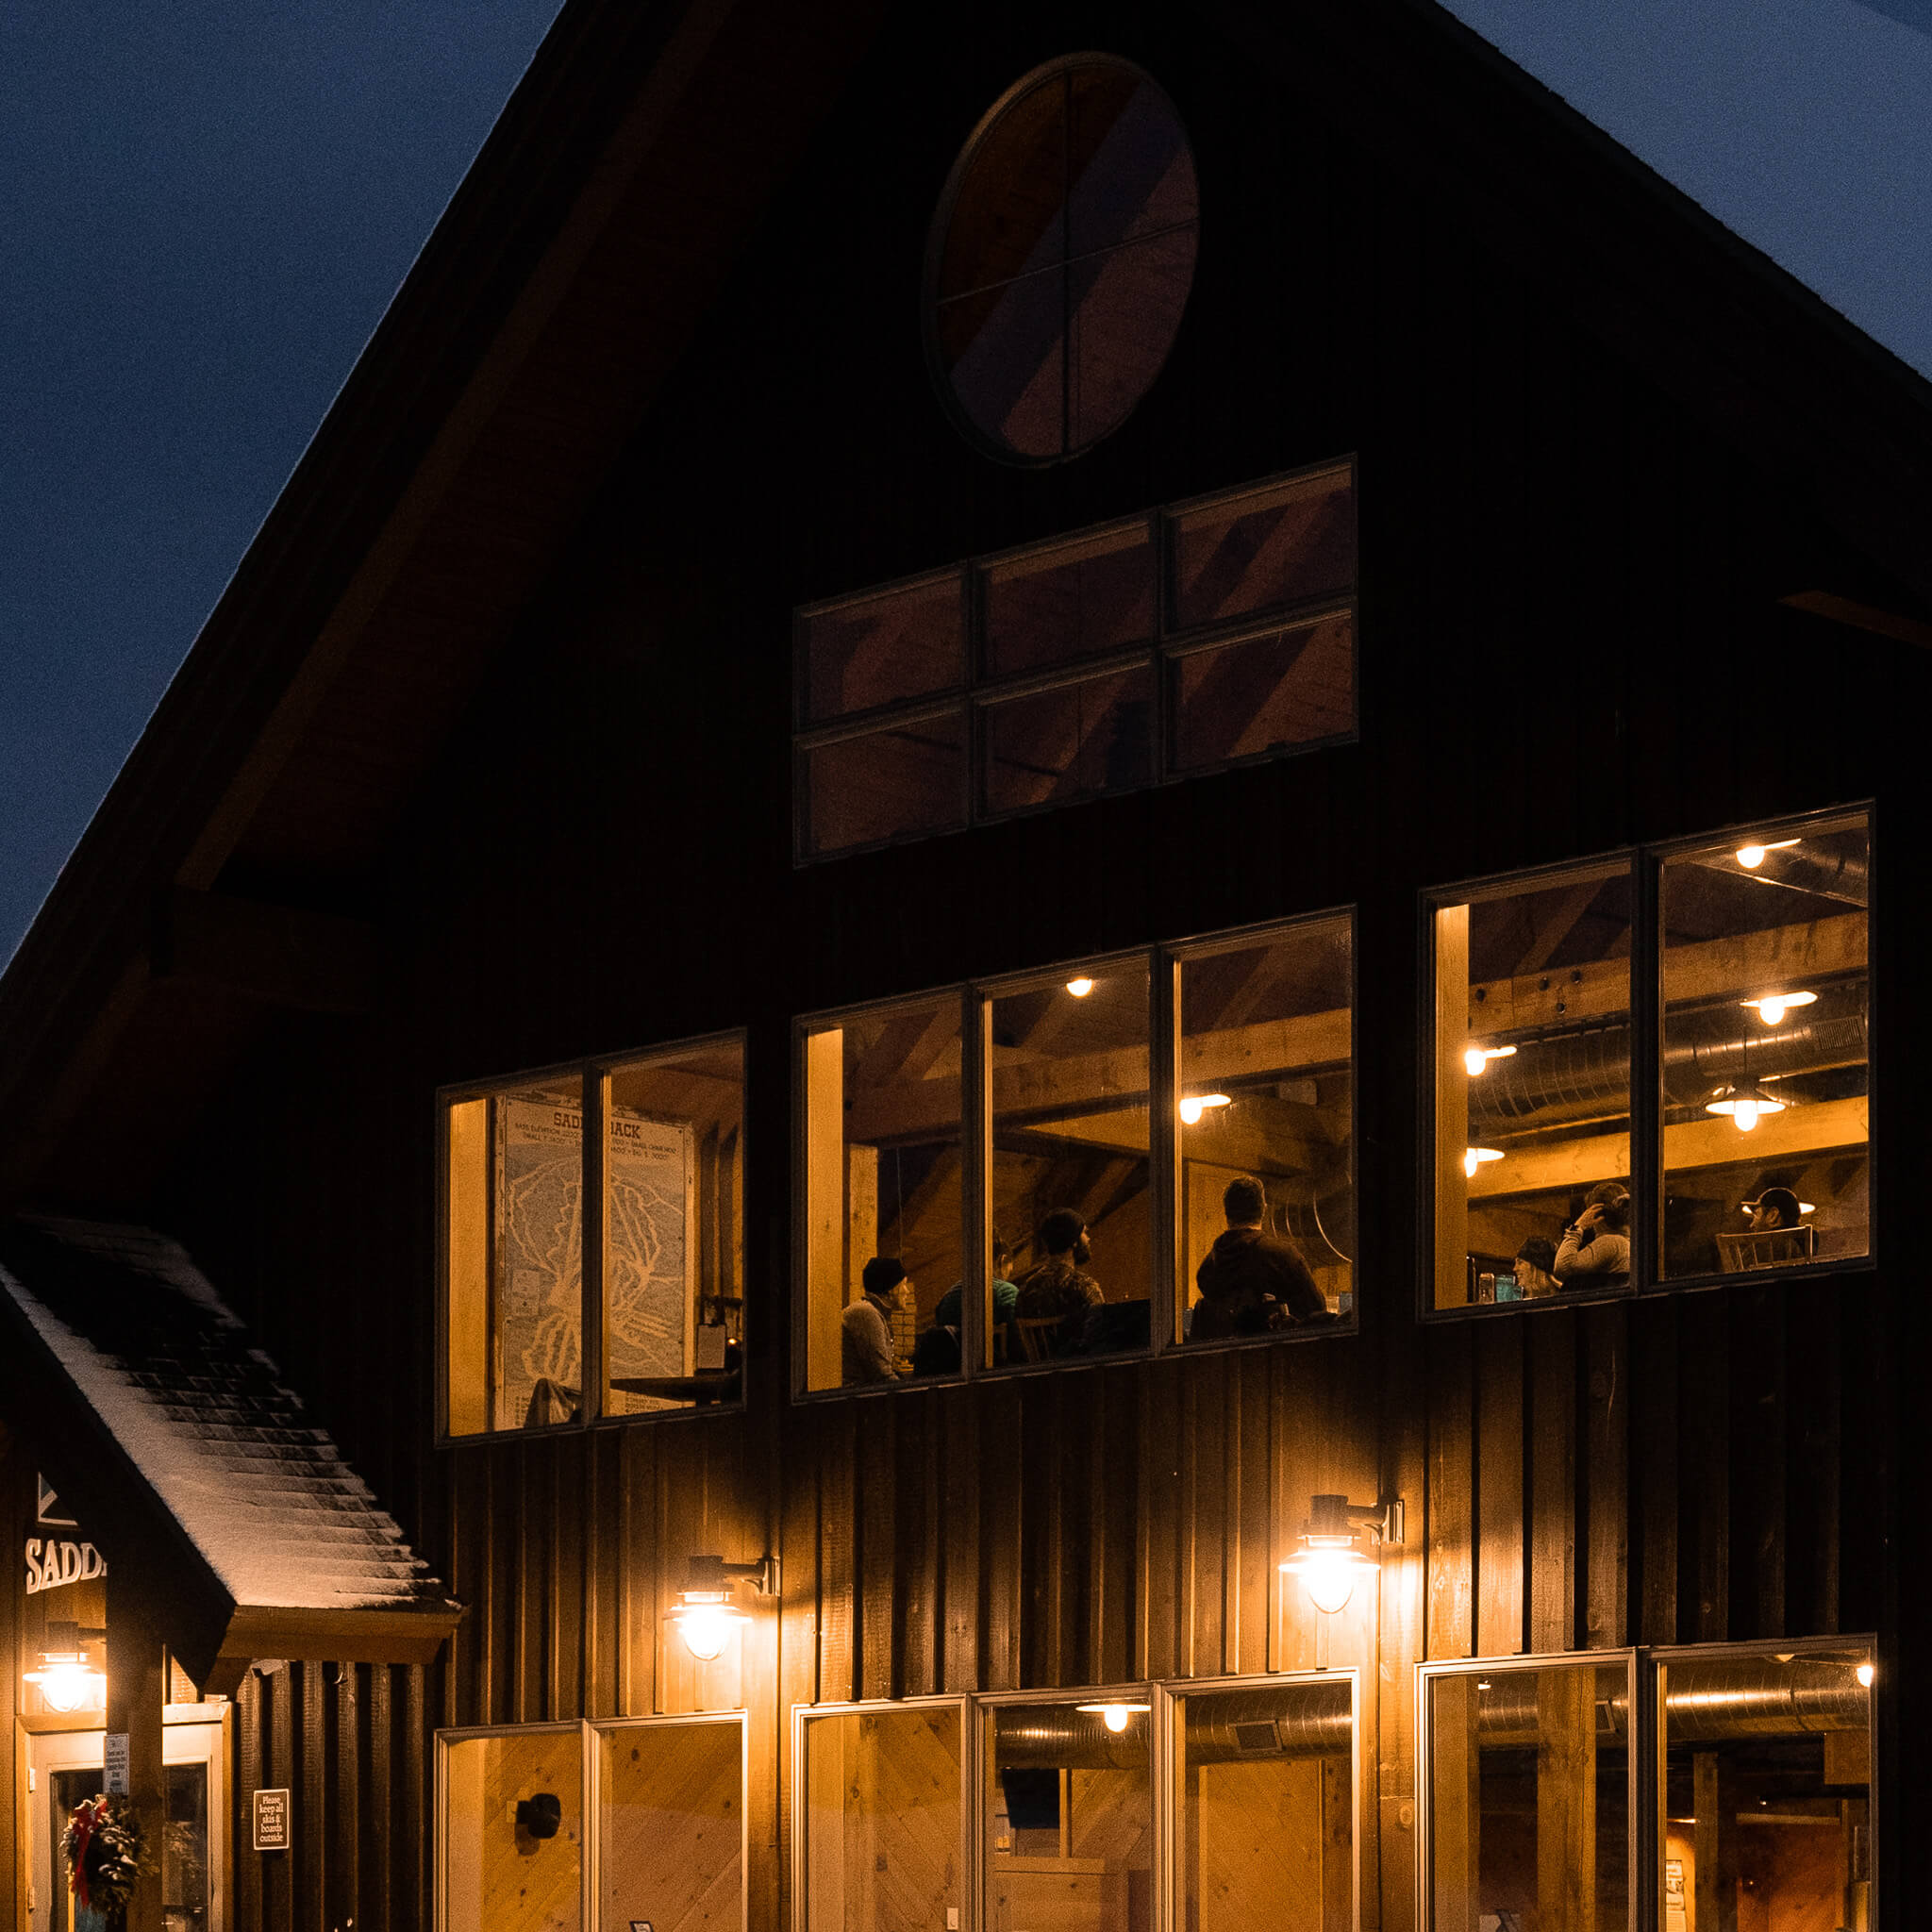 The Saddleback Lodge at night